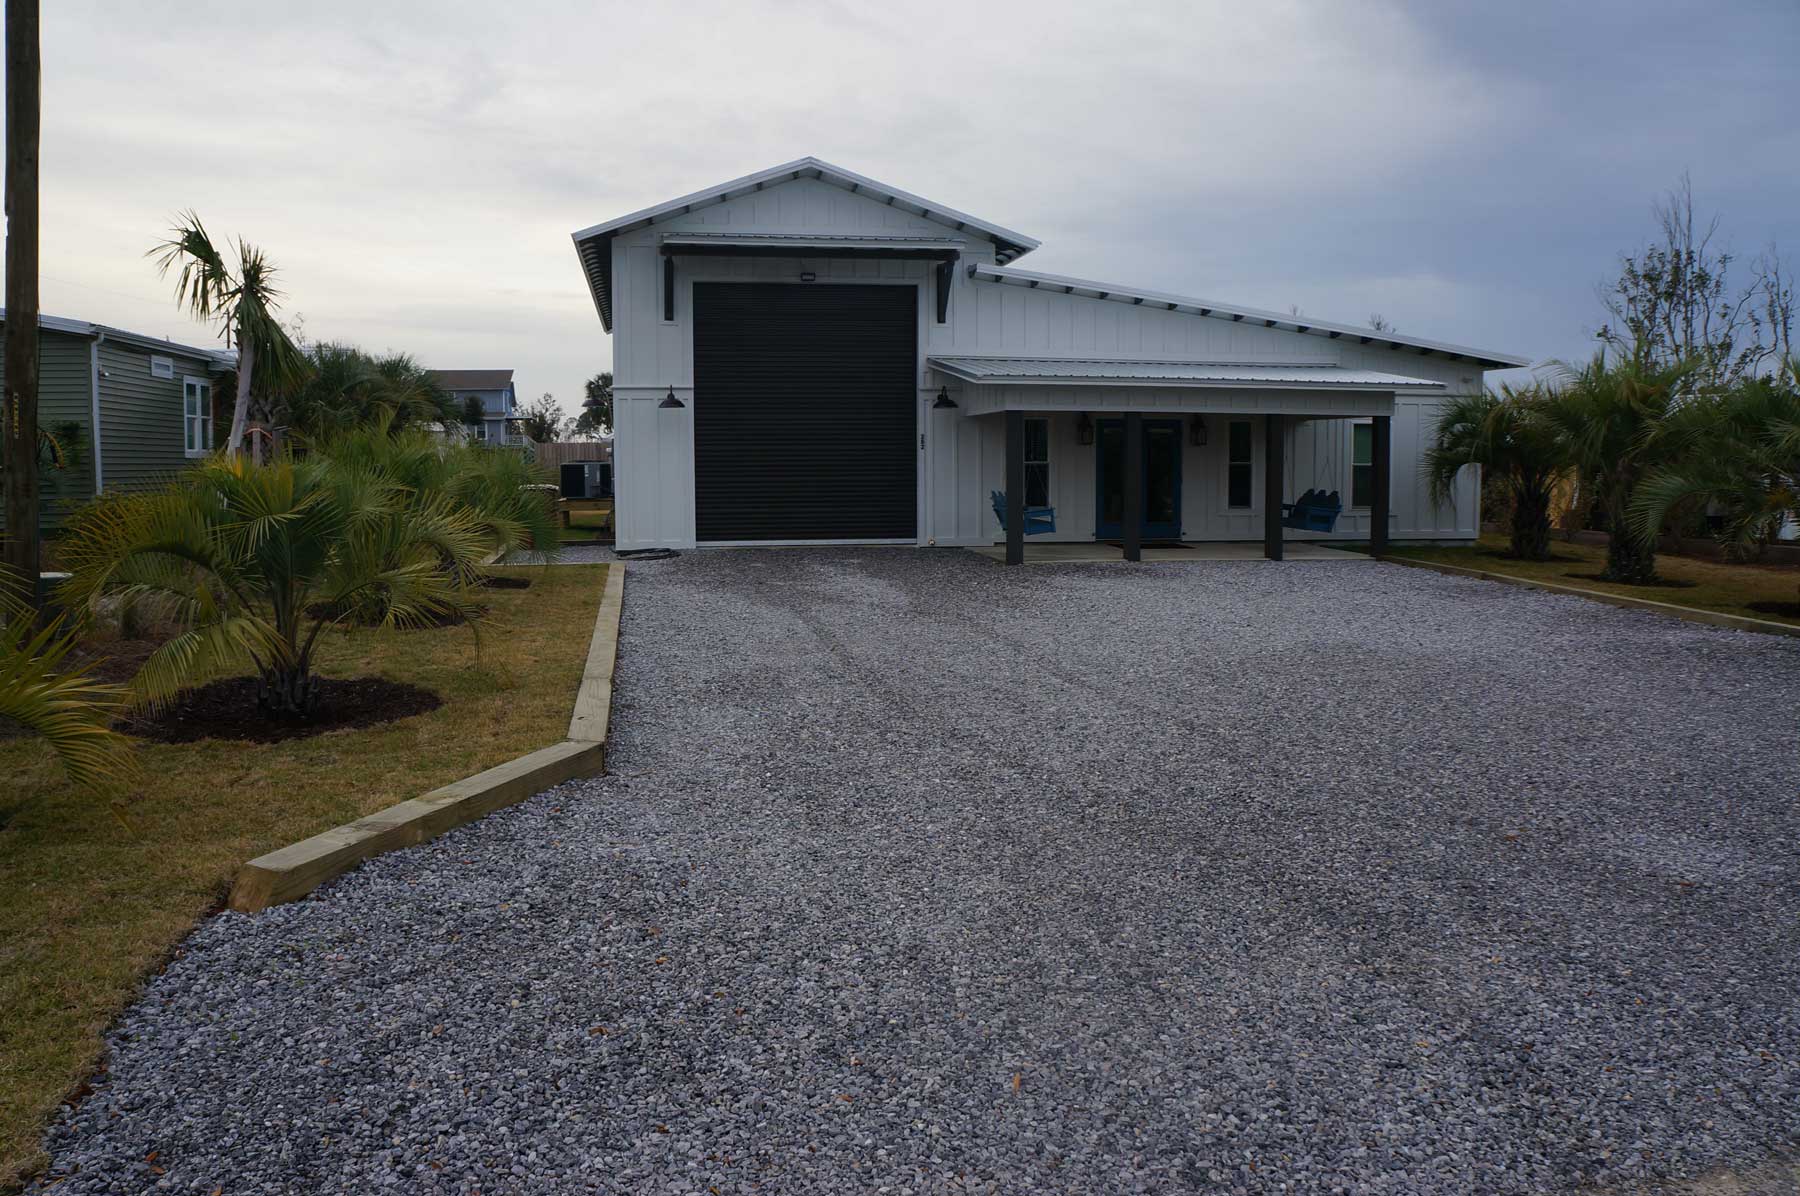 Custom built cottage with boat storage in Port St Joe, FL.